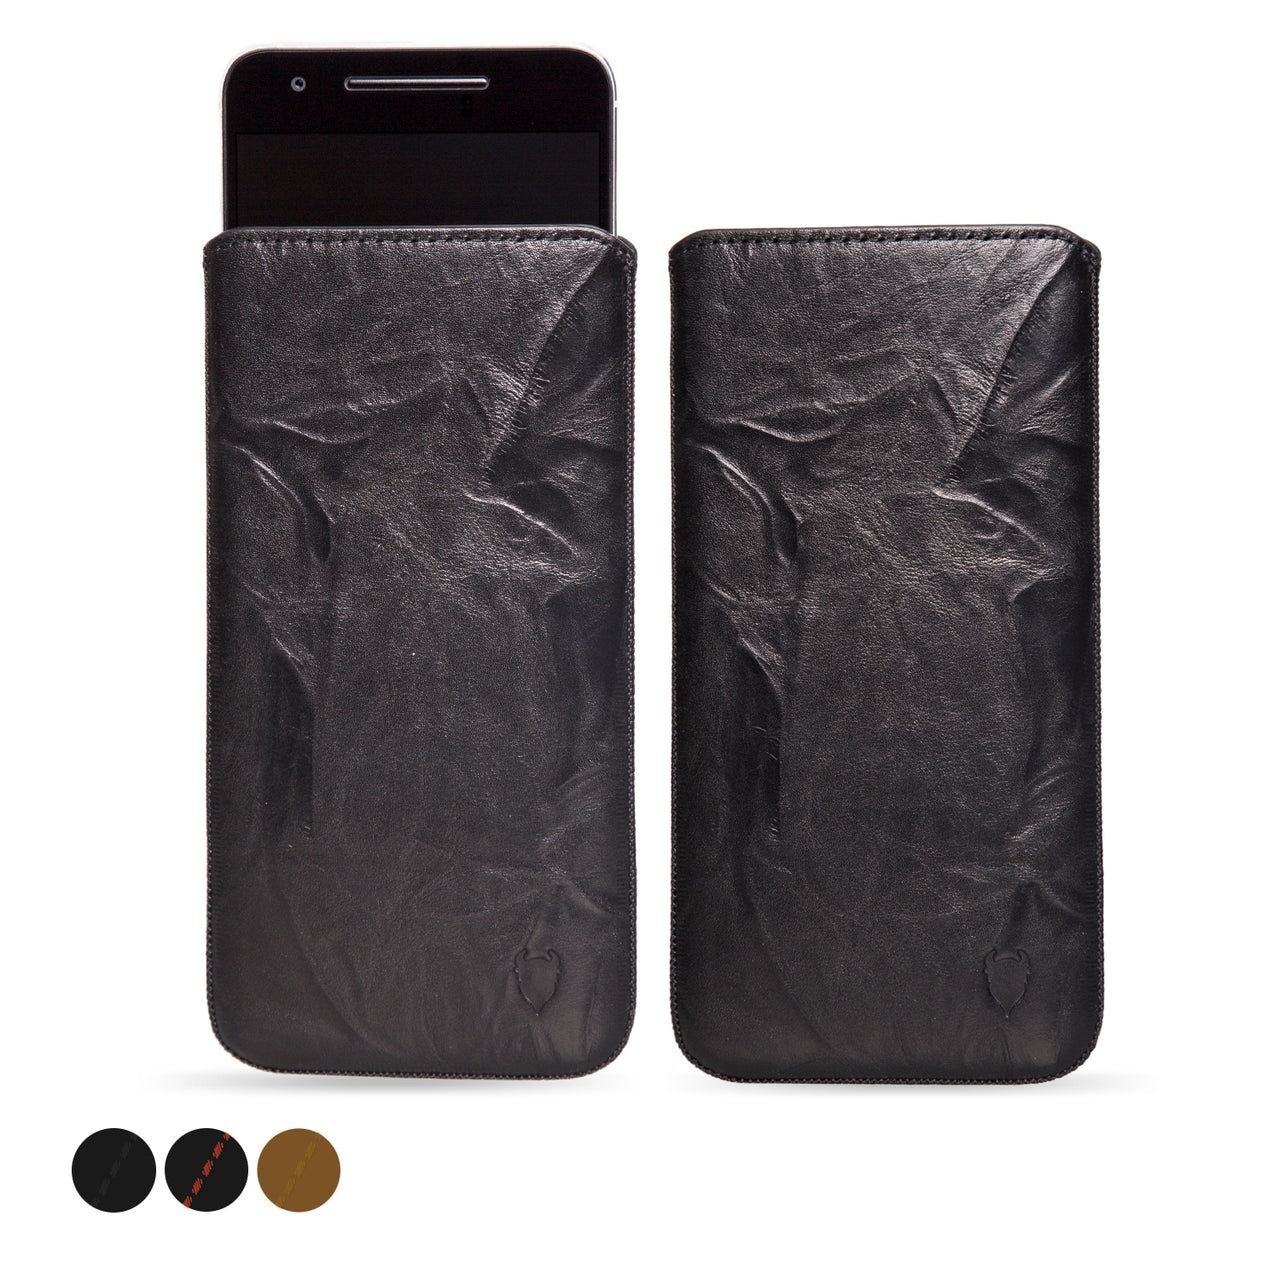 Google Pixel 3a XL Genuine Leather Pouch Sleeve Case | Artisanpouch